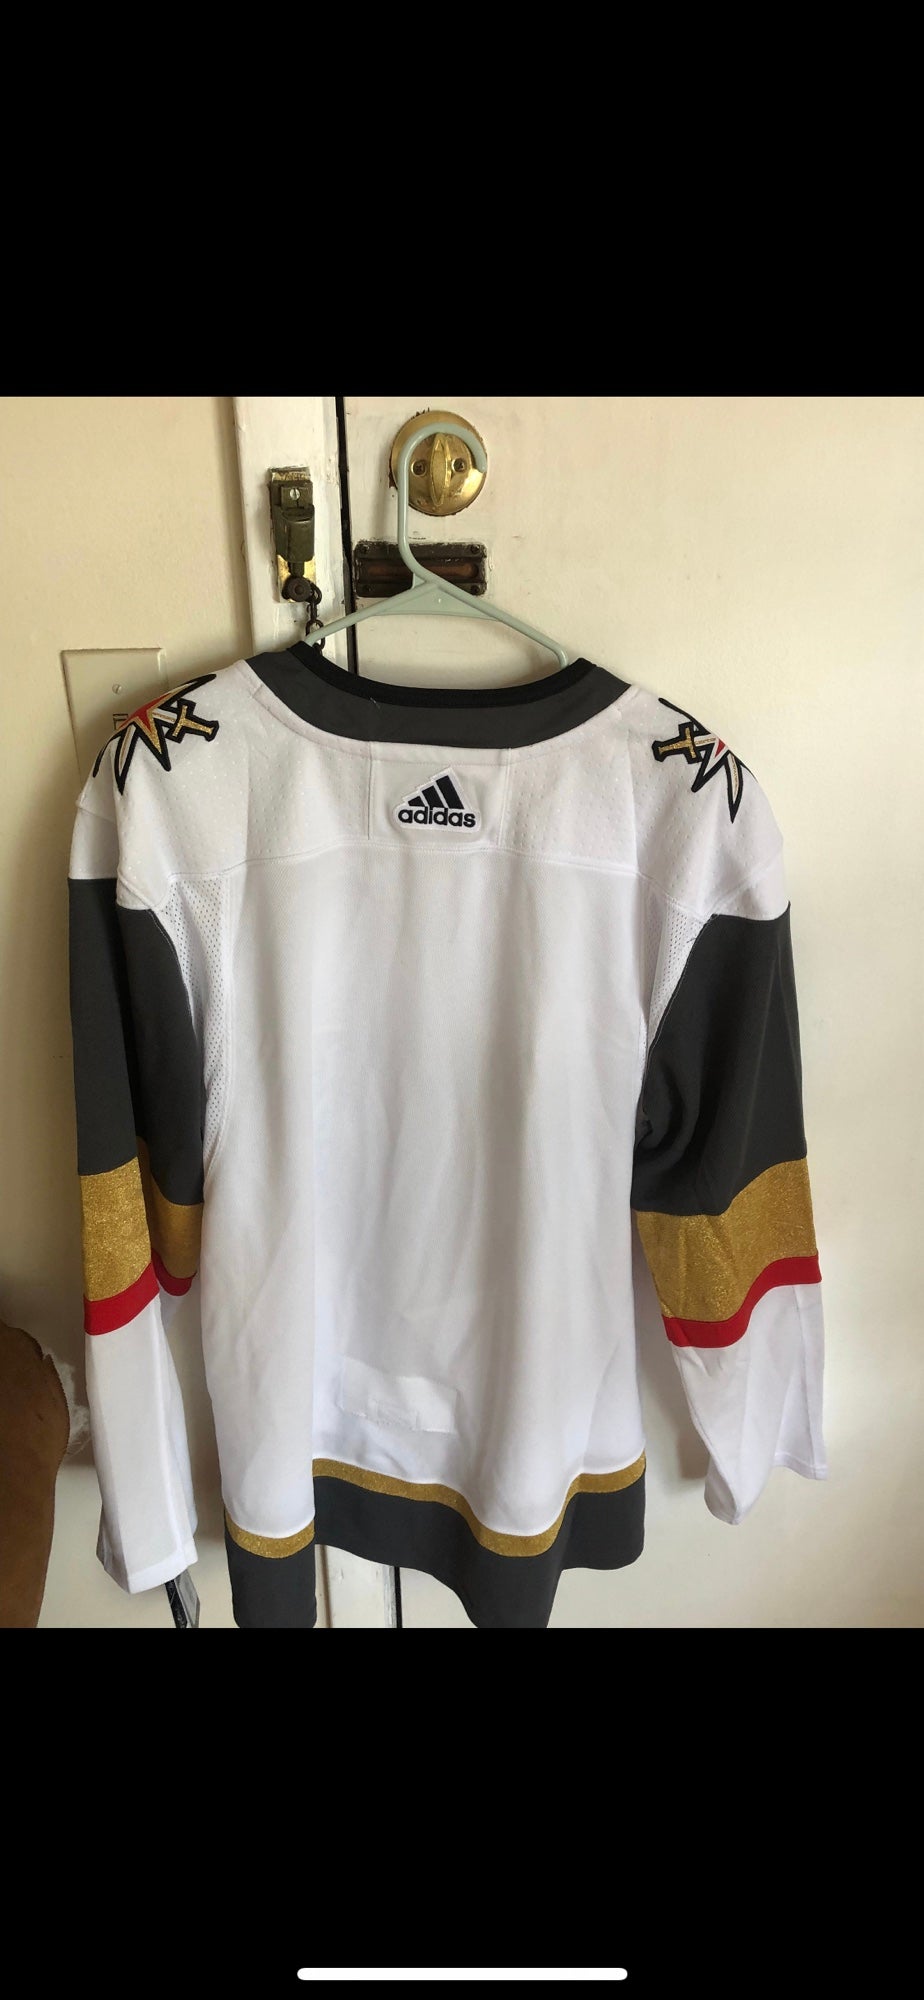 Las Vegas Golden Knights Hockey Jersey - Size Large - 2017